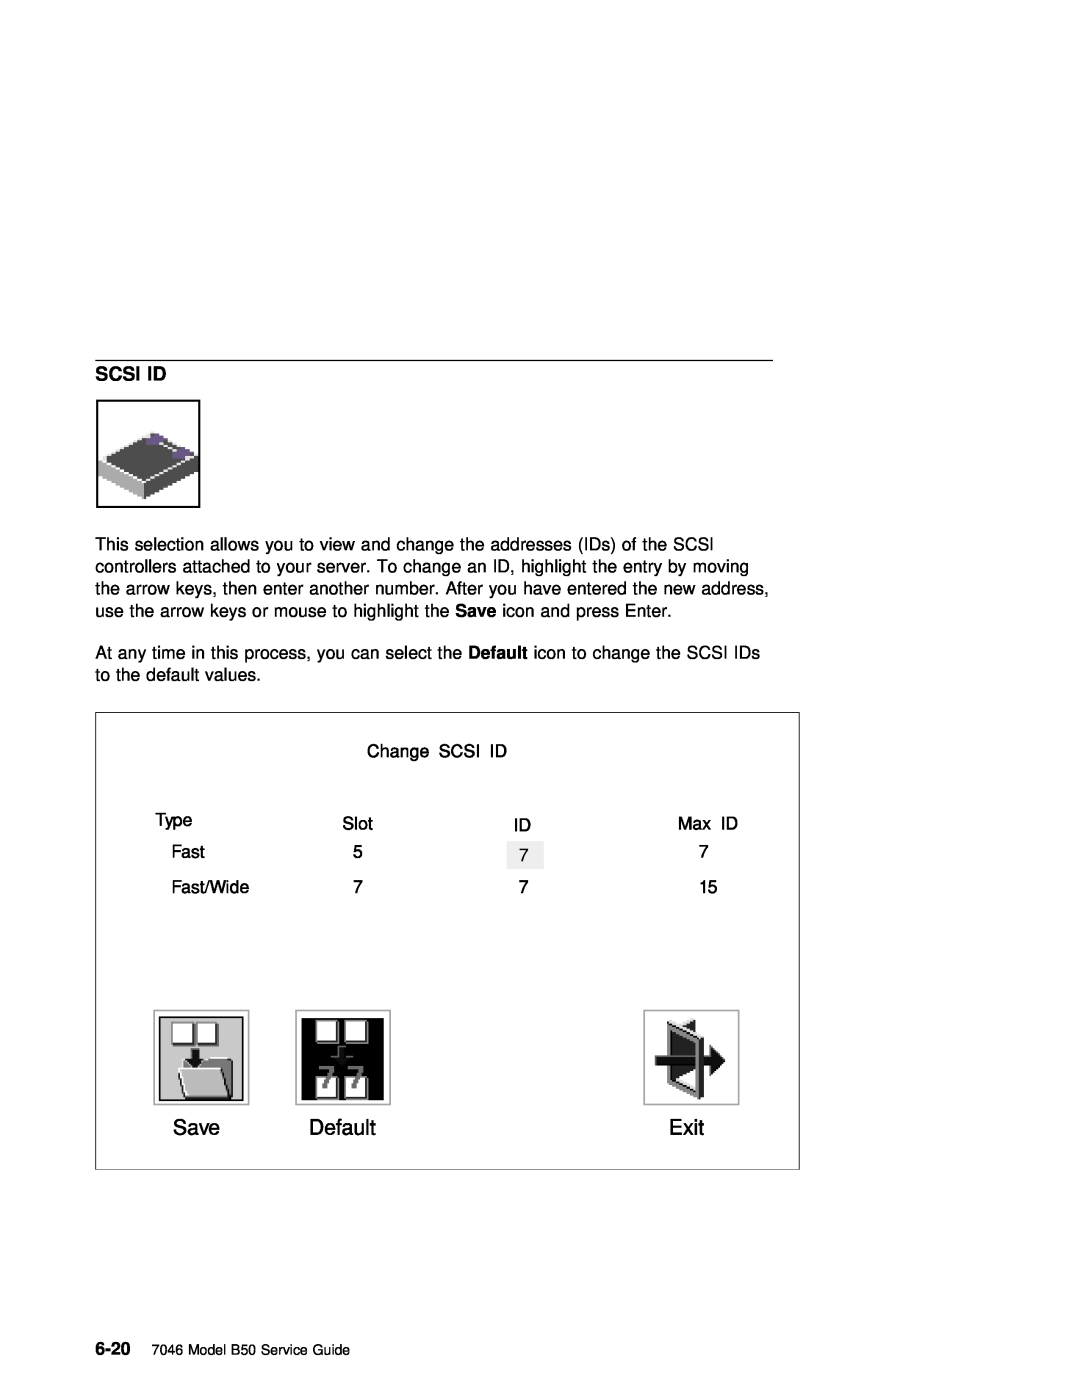 IBM manual Scsi Id, 6-20 7046 Model B50 Service Guide 